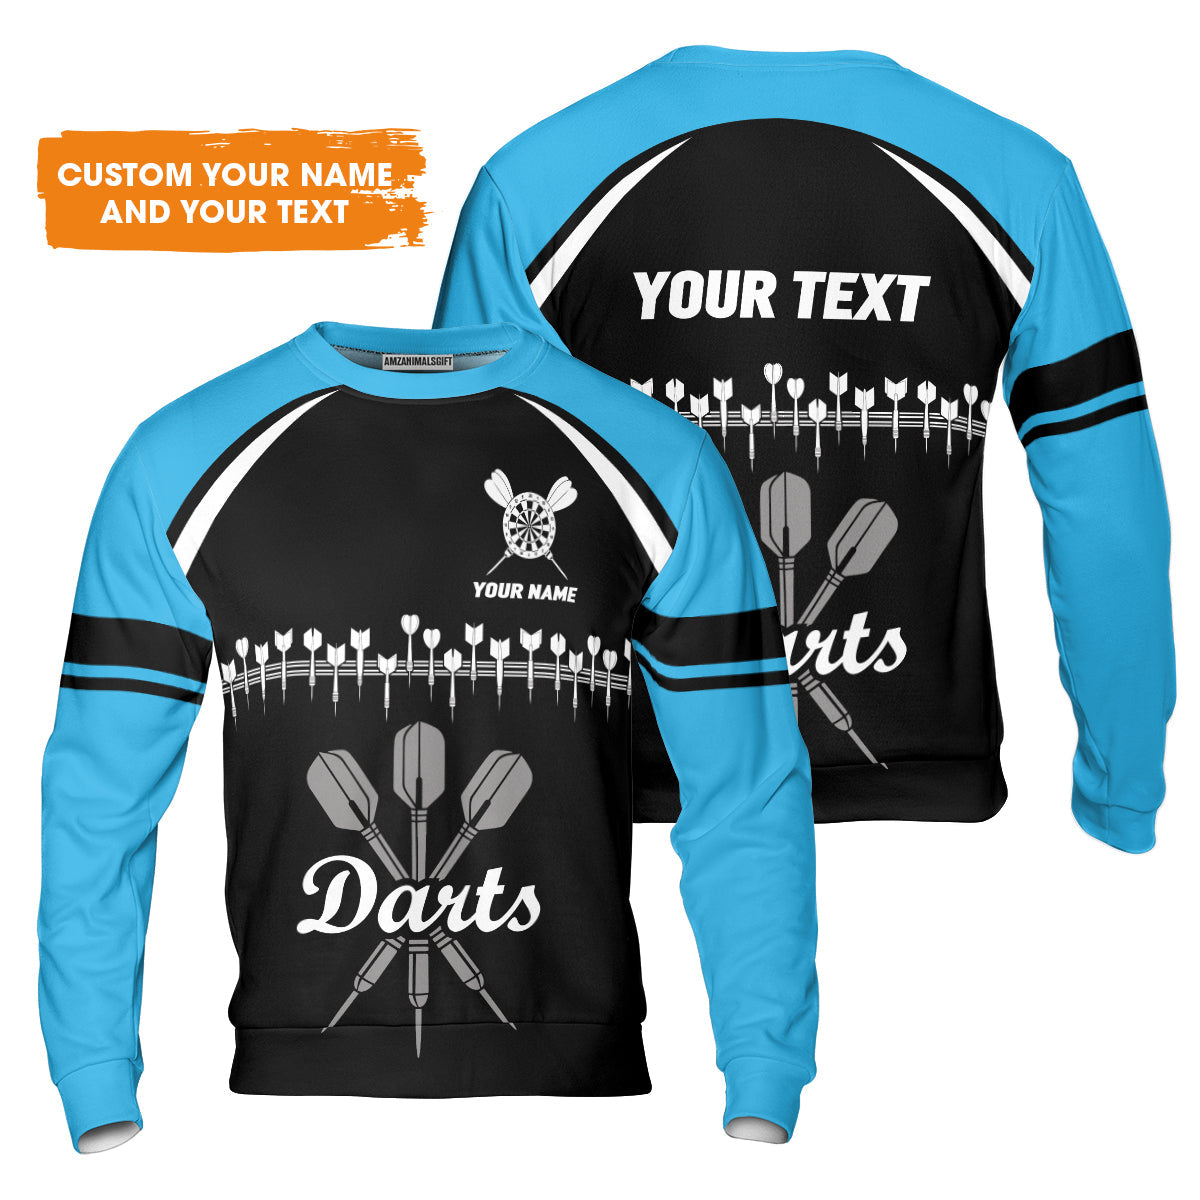 Customized Name & Text Darts Sweatshirt, Personalized Darts Team Blue Sweatshirt - Perfect Gift For Darts Lovers